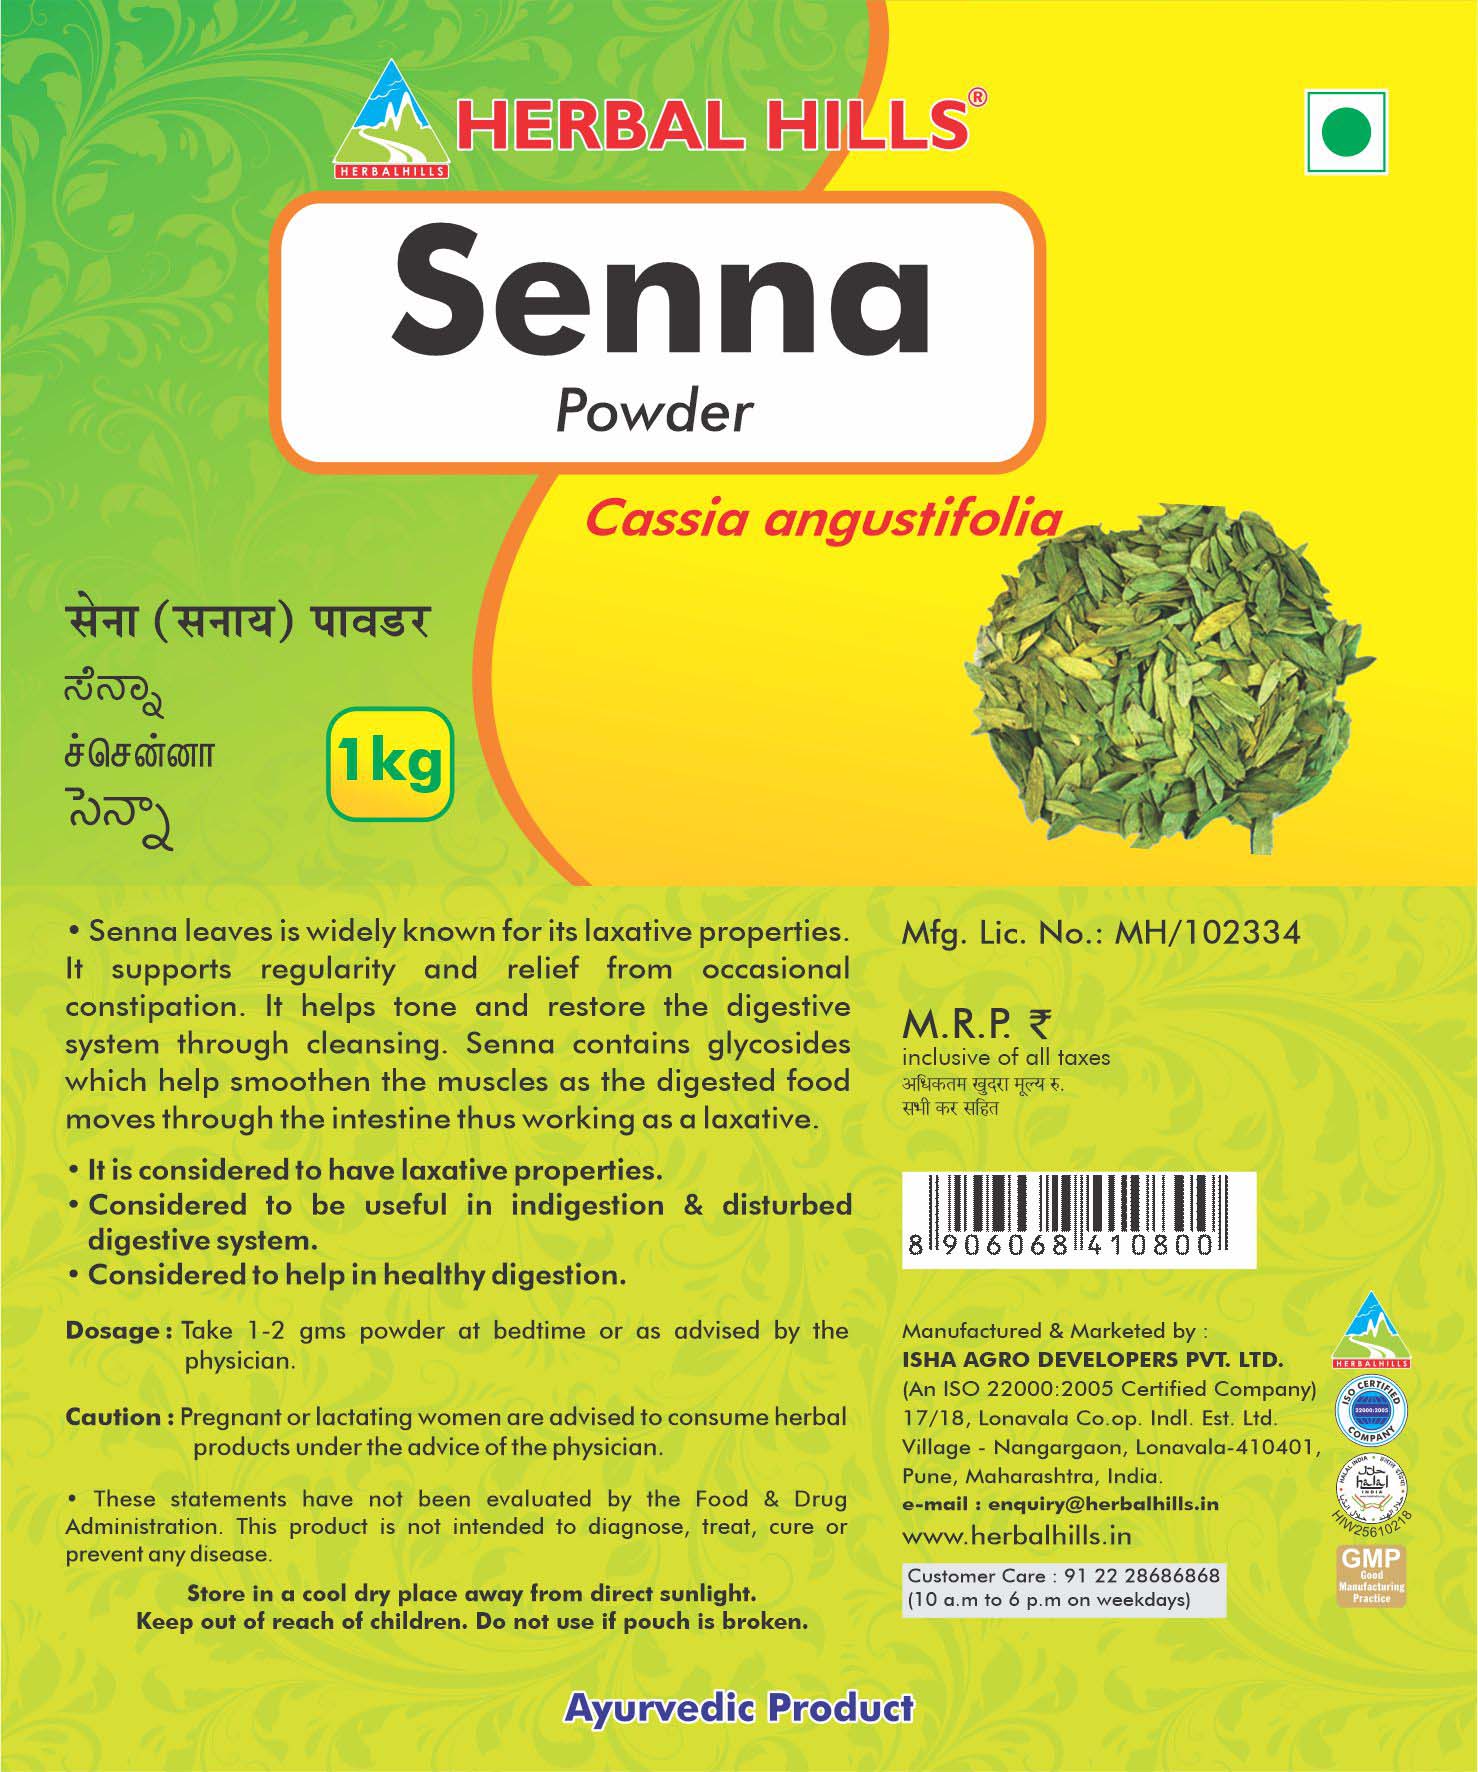 Herbal Hills Senna powder